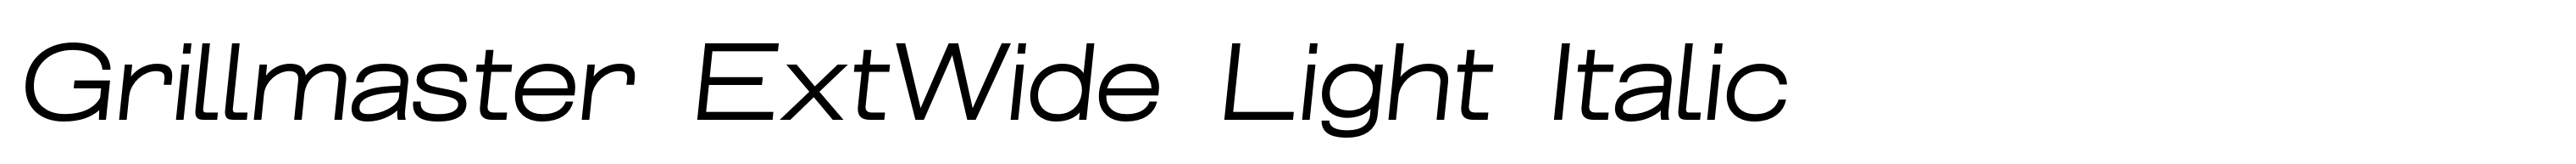 Grillmaster ExtWide Light Italic